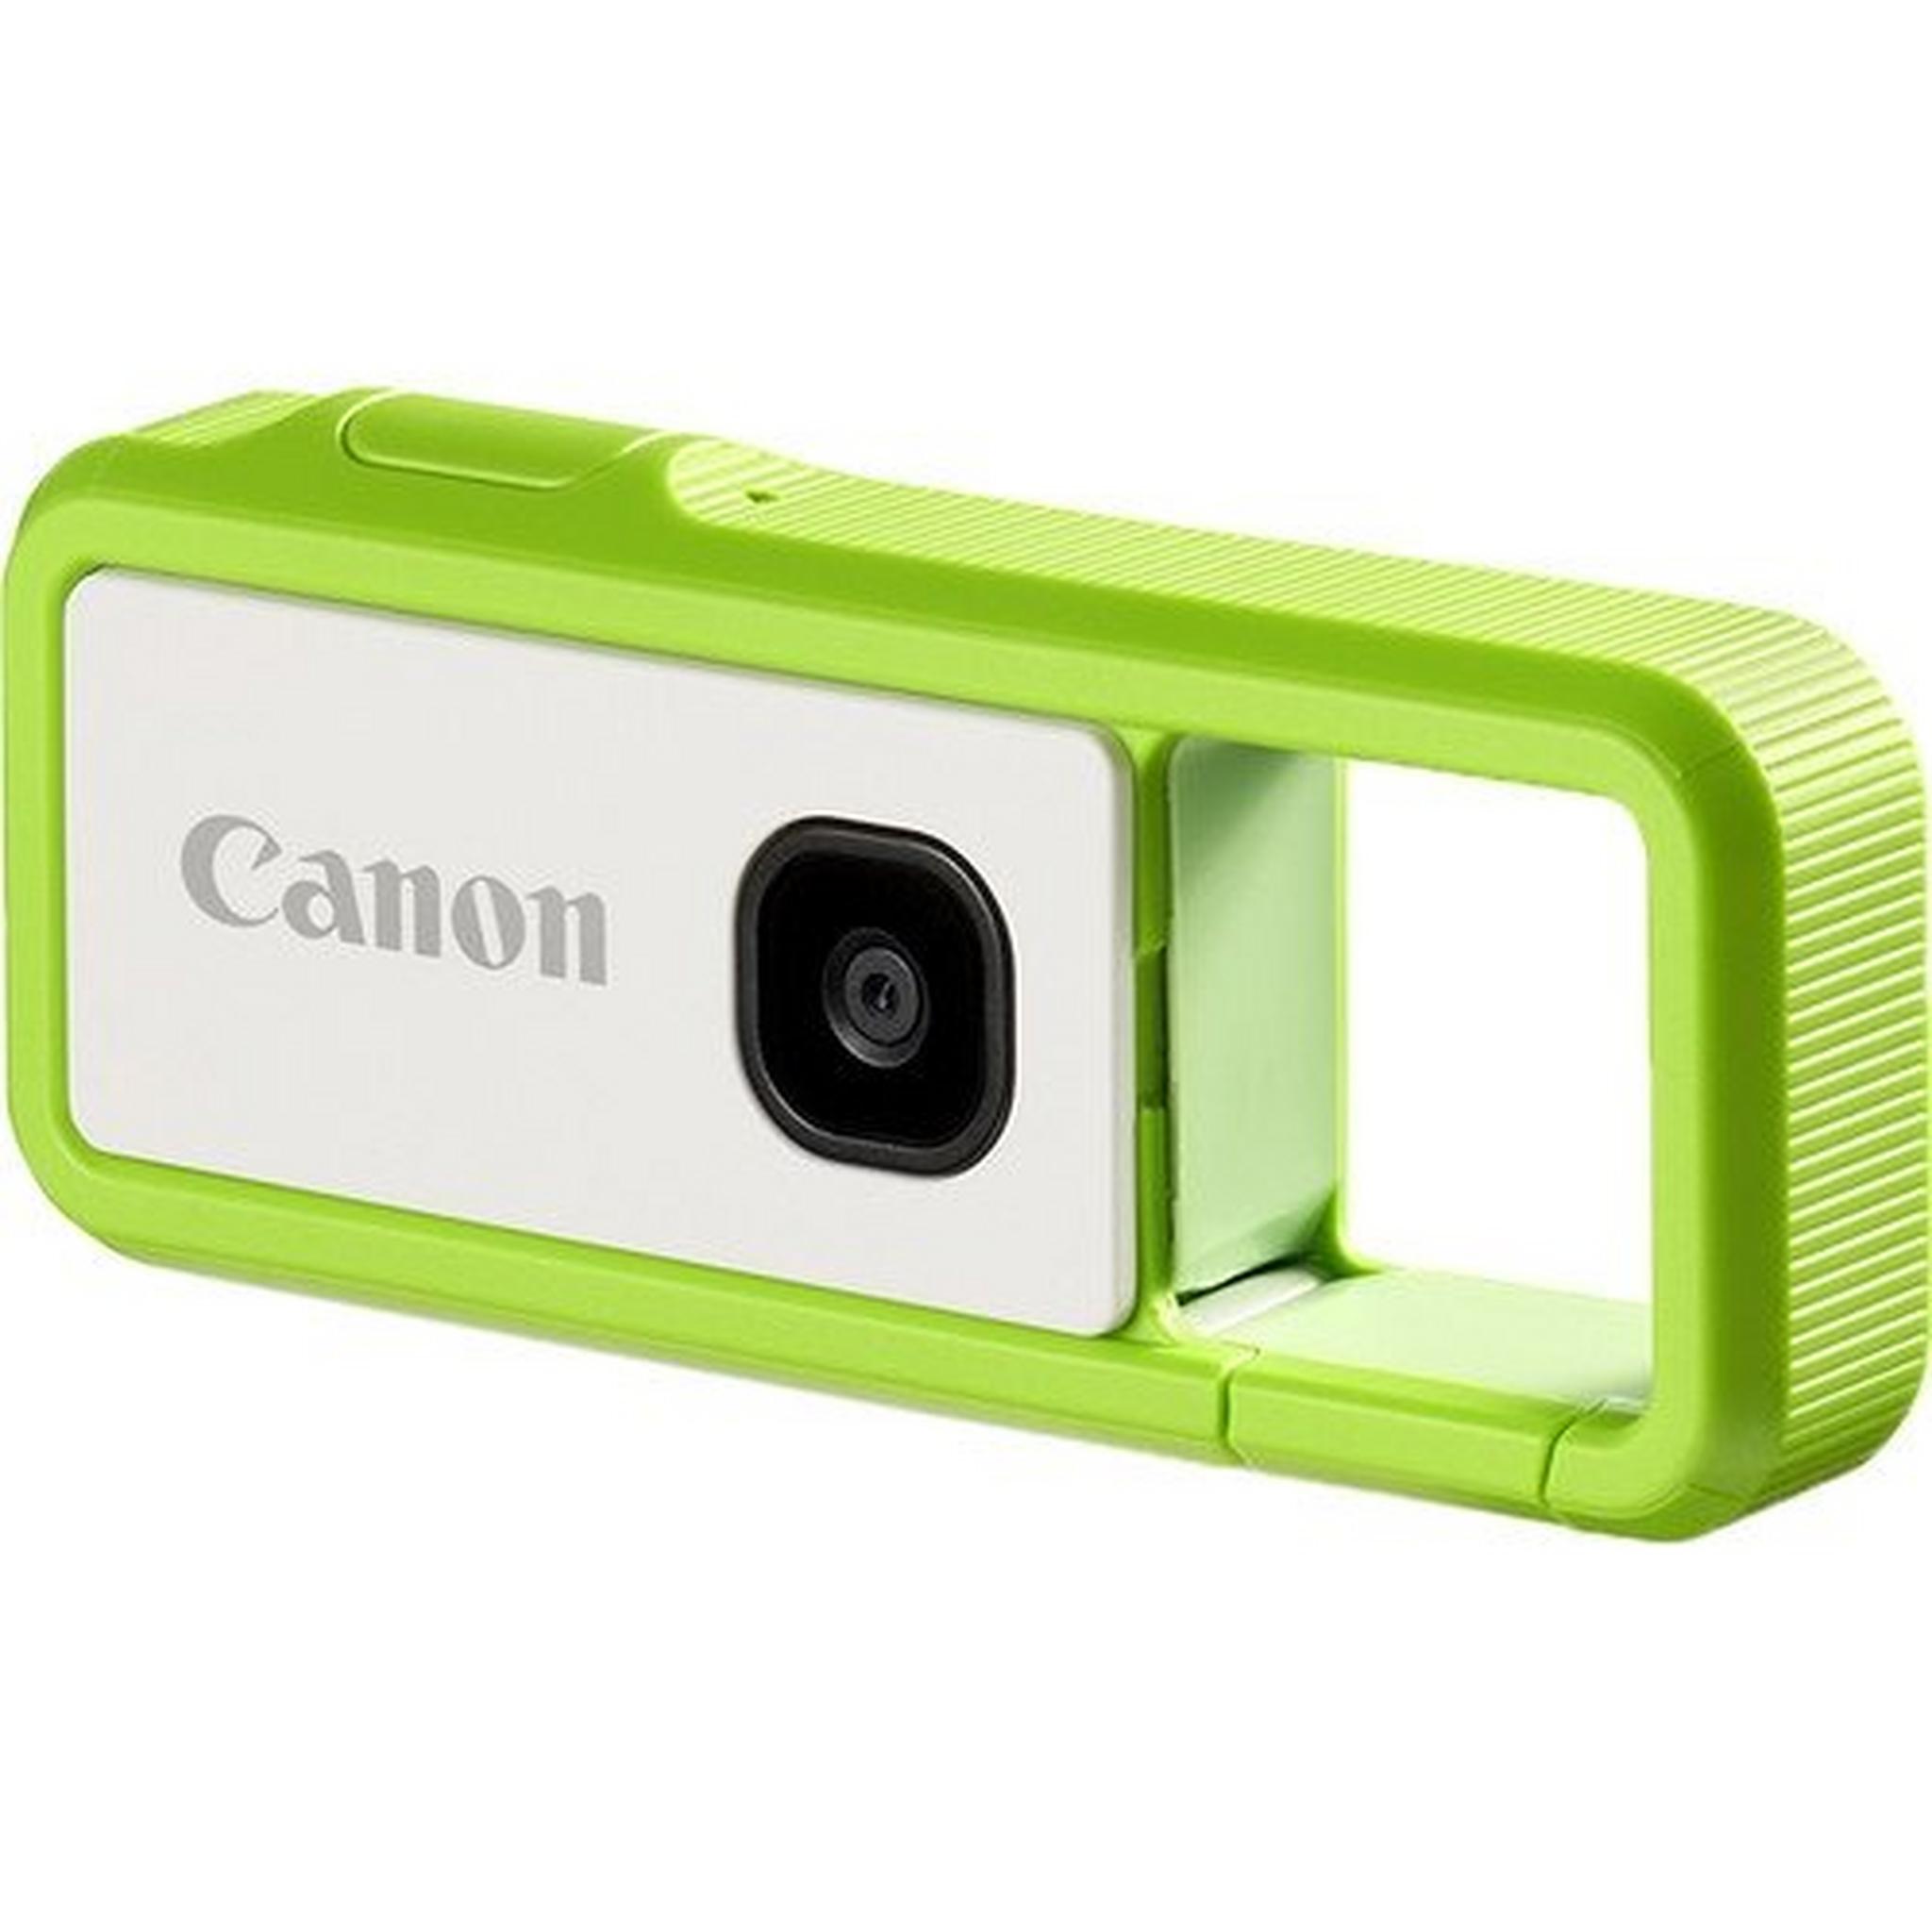 Canon IVY REC Digital Camera - Avocado